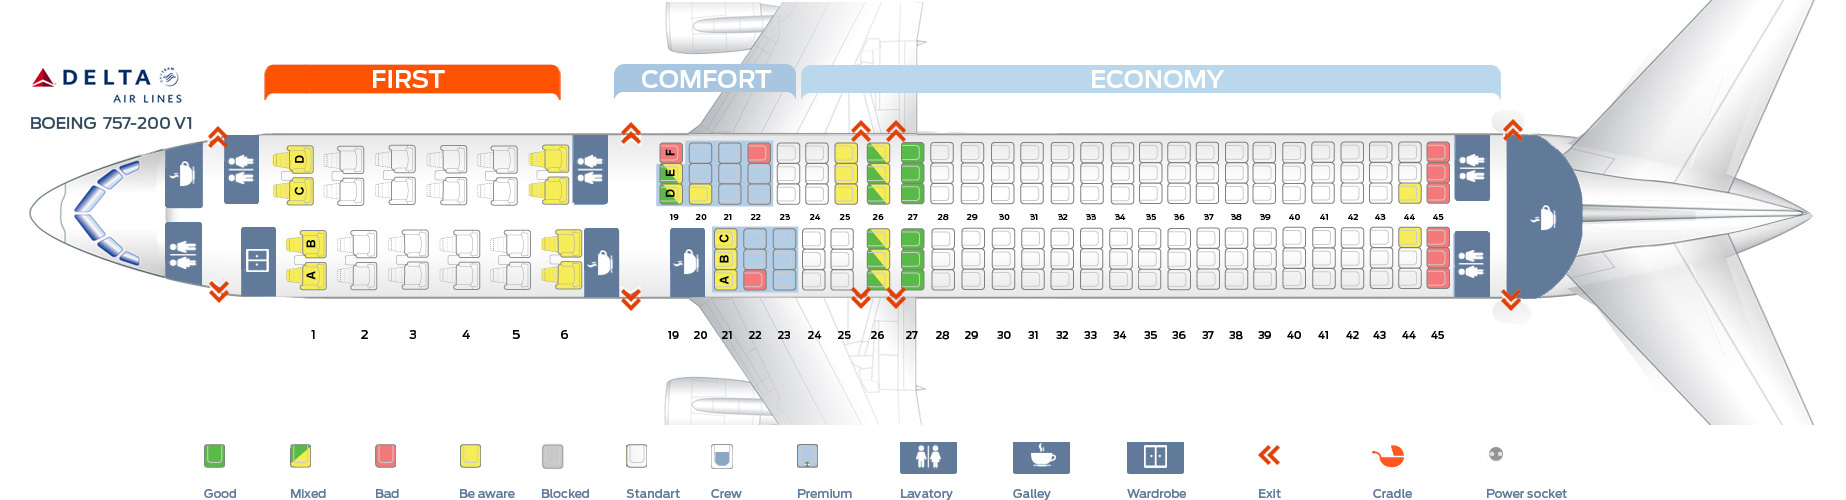 757 Seating Chart